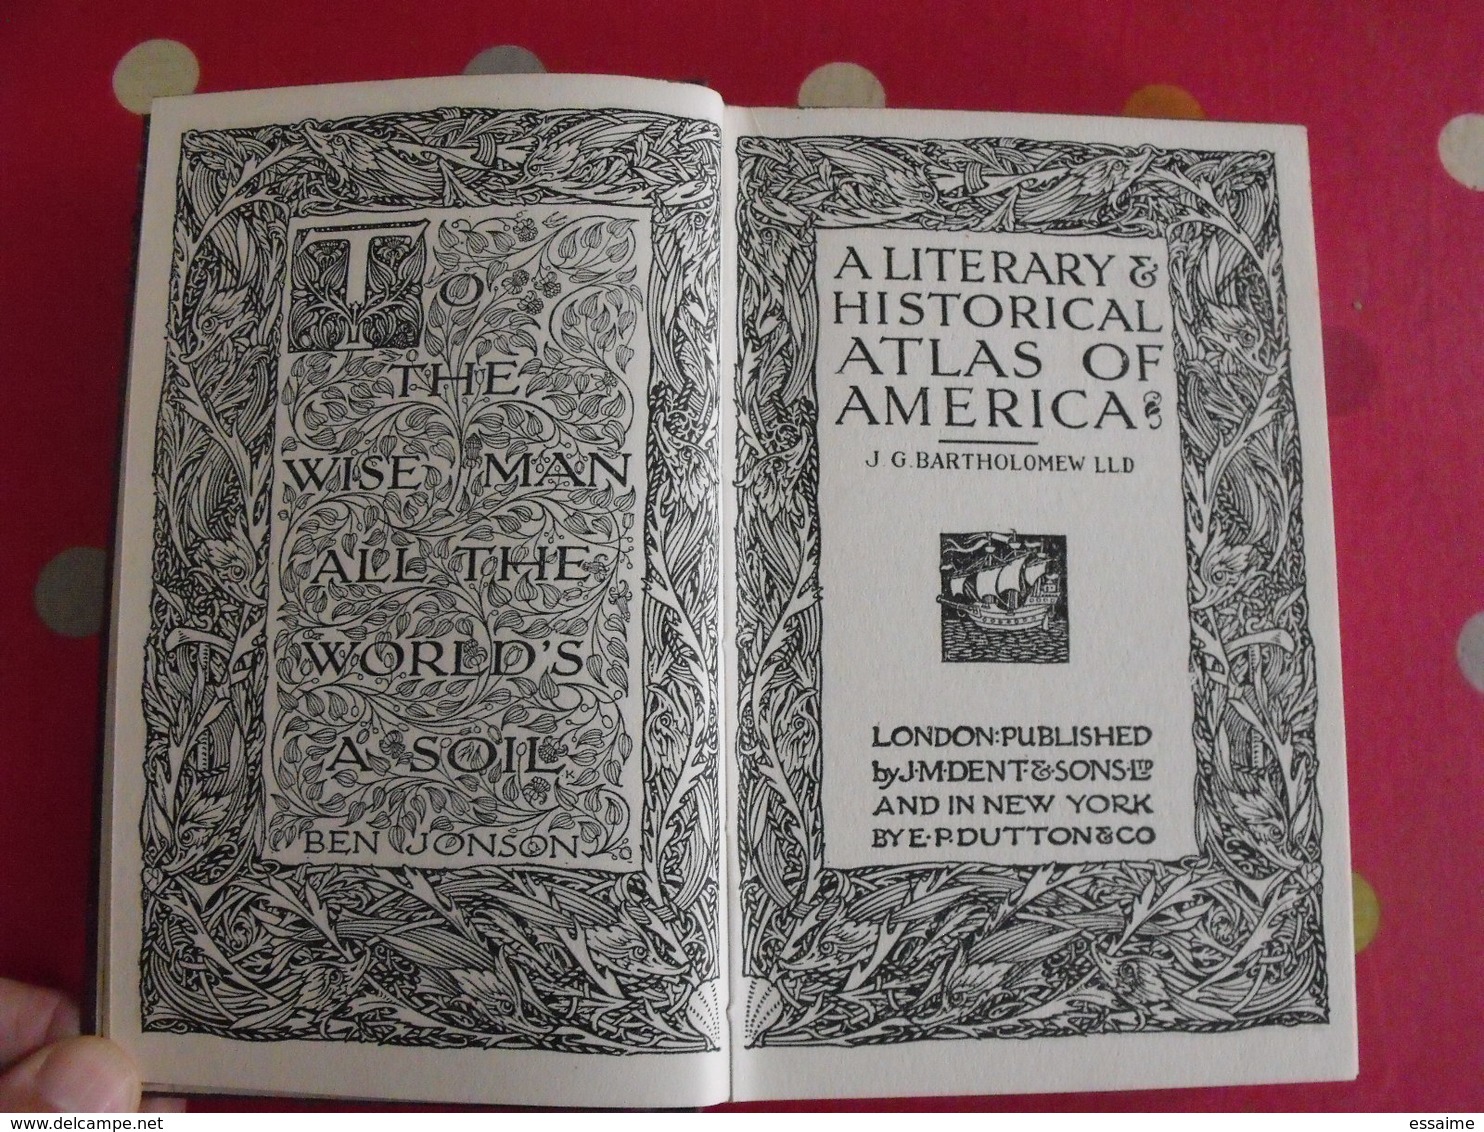 a literary & historical atlas of Europe; Bartholomew. Dent, London, 1912